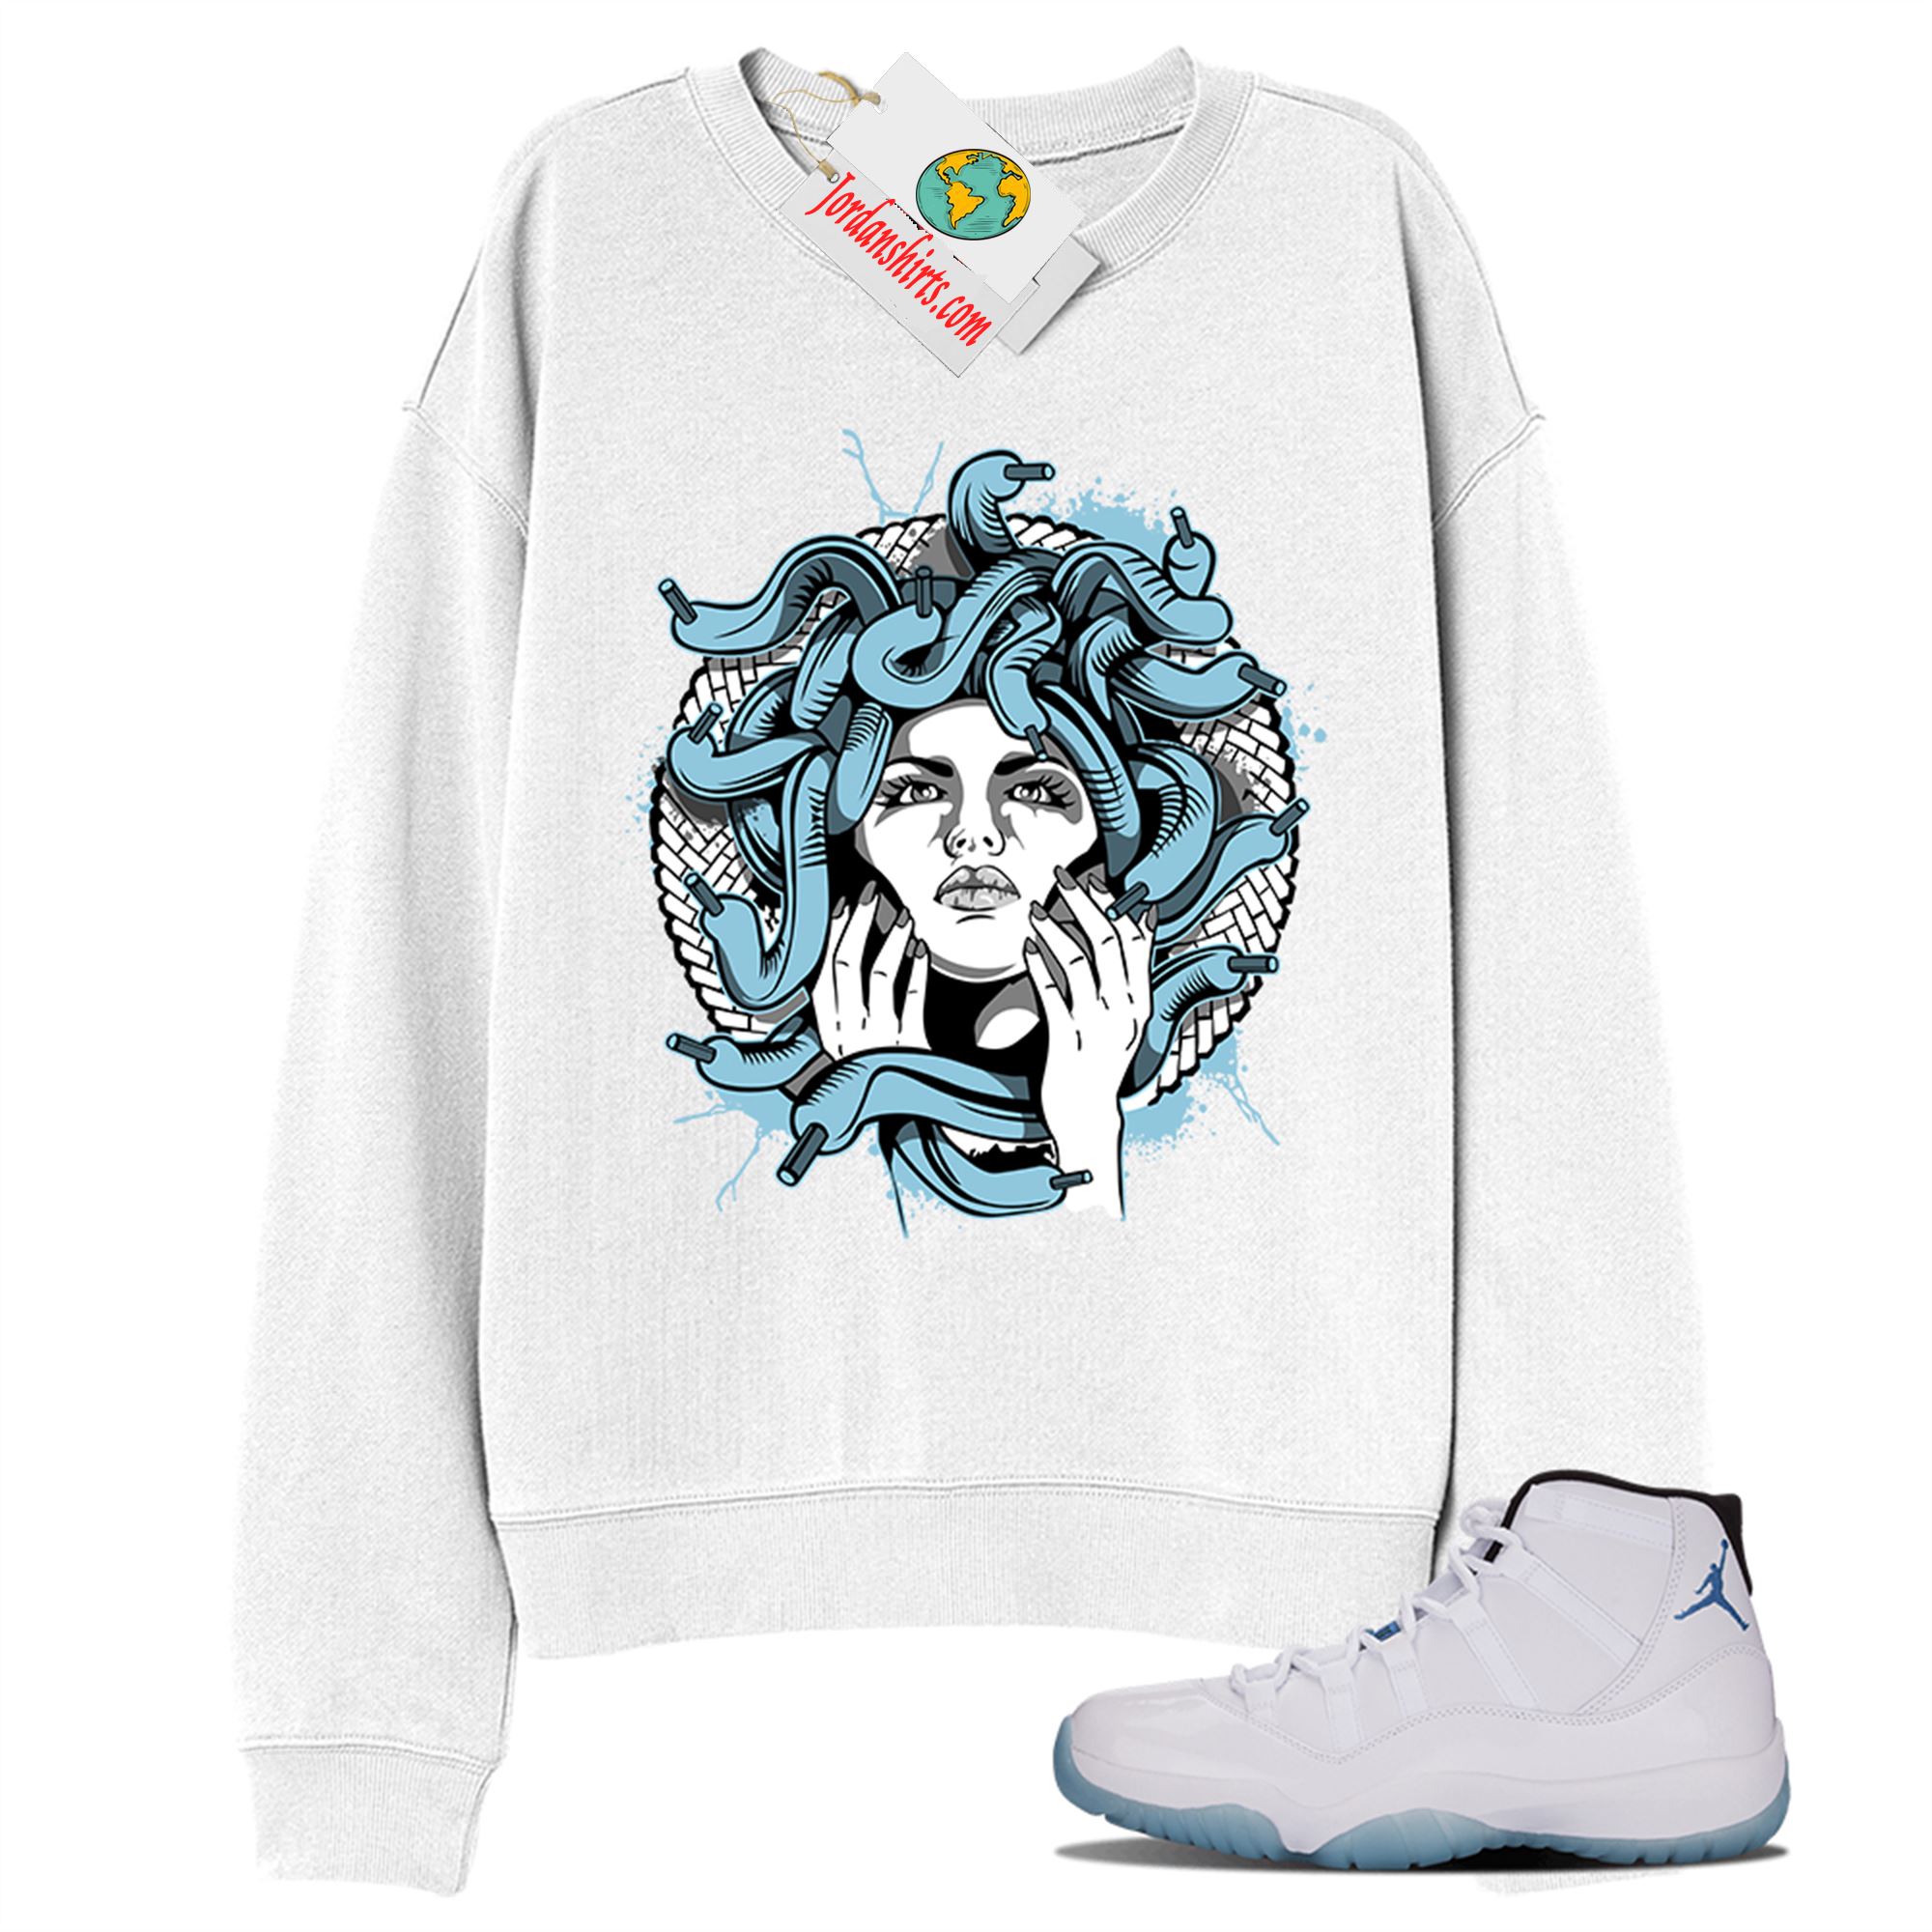 Jordan 11 Sweatshirt, Medusa White Sweatshirt Air Jordan 11 Legend Blue 11s Size Up To 5xl